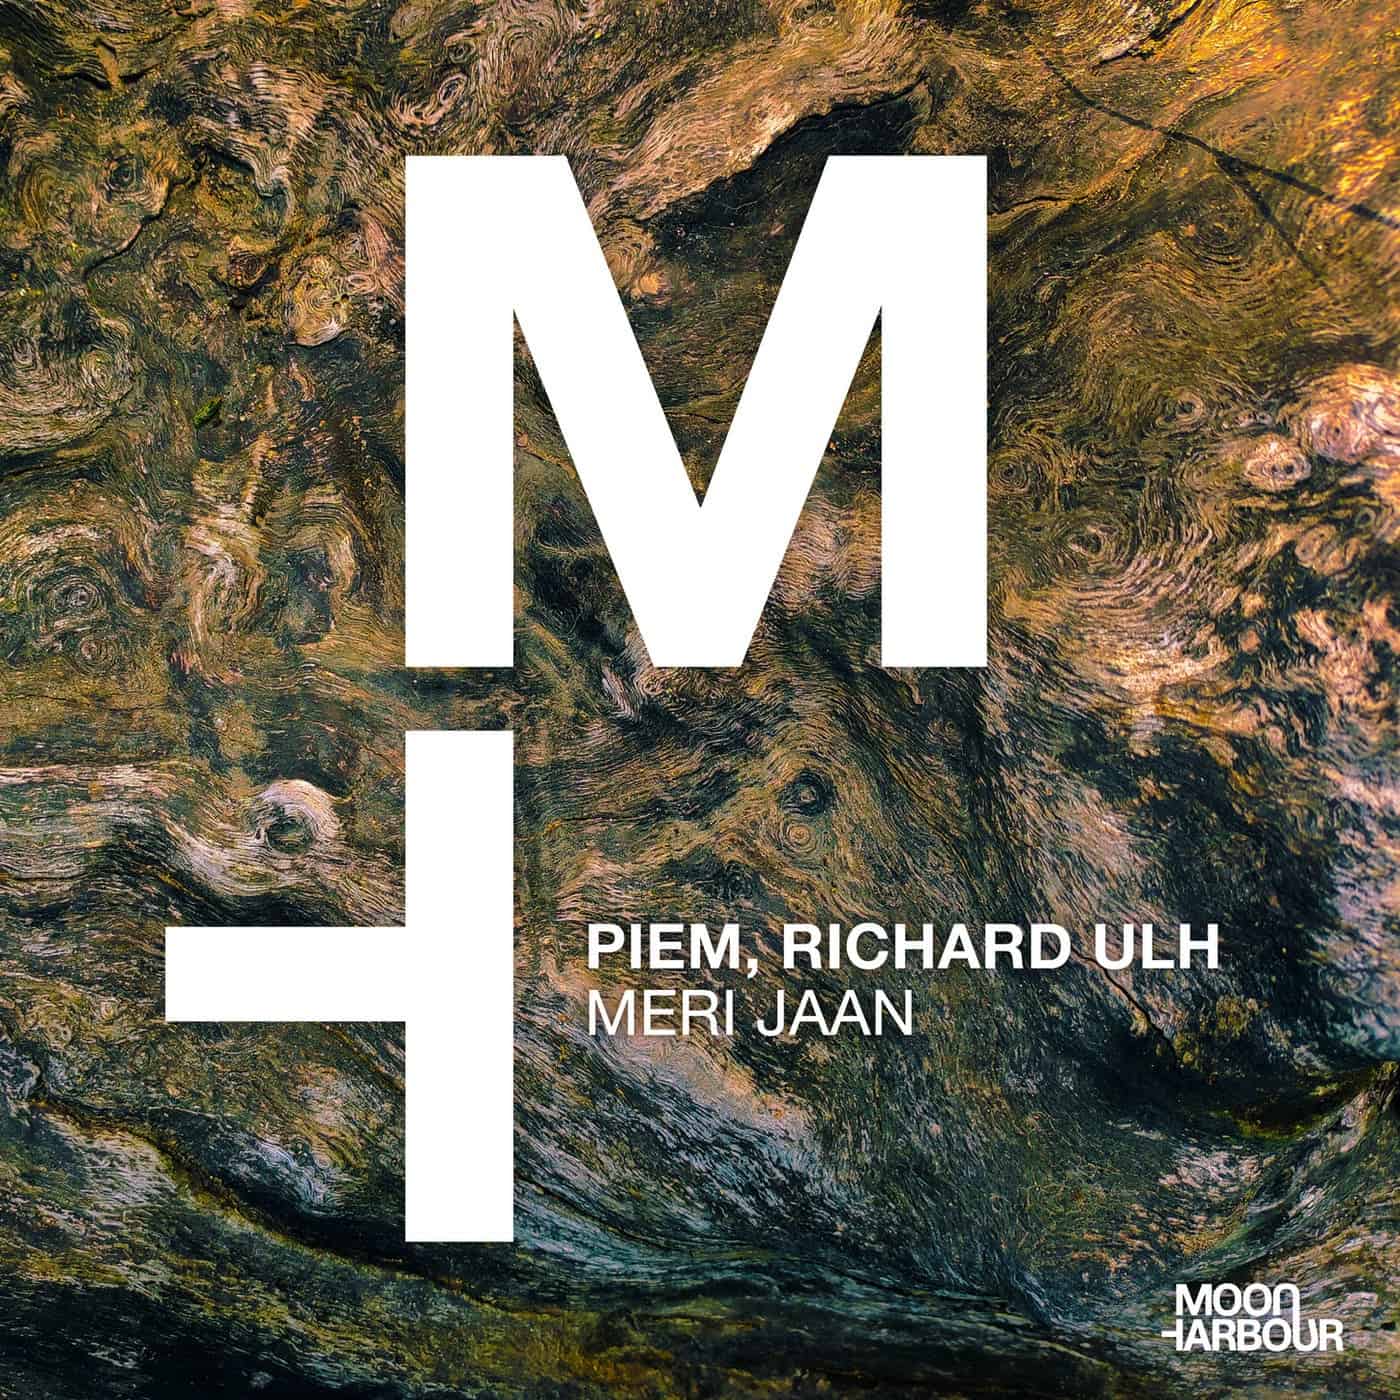 Download Piem, Richard Ulh - Meri Jaan on Electrobuzz